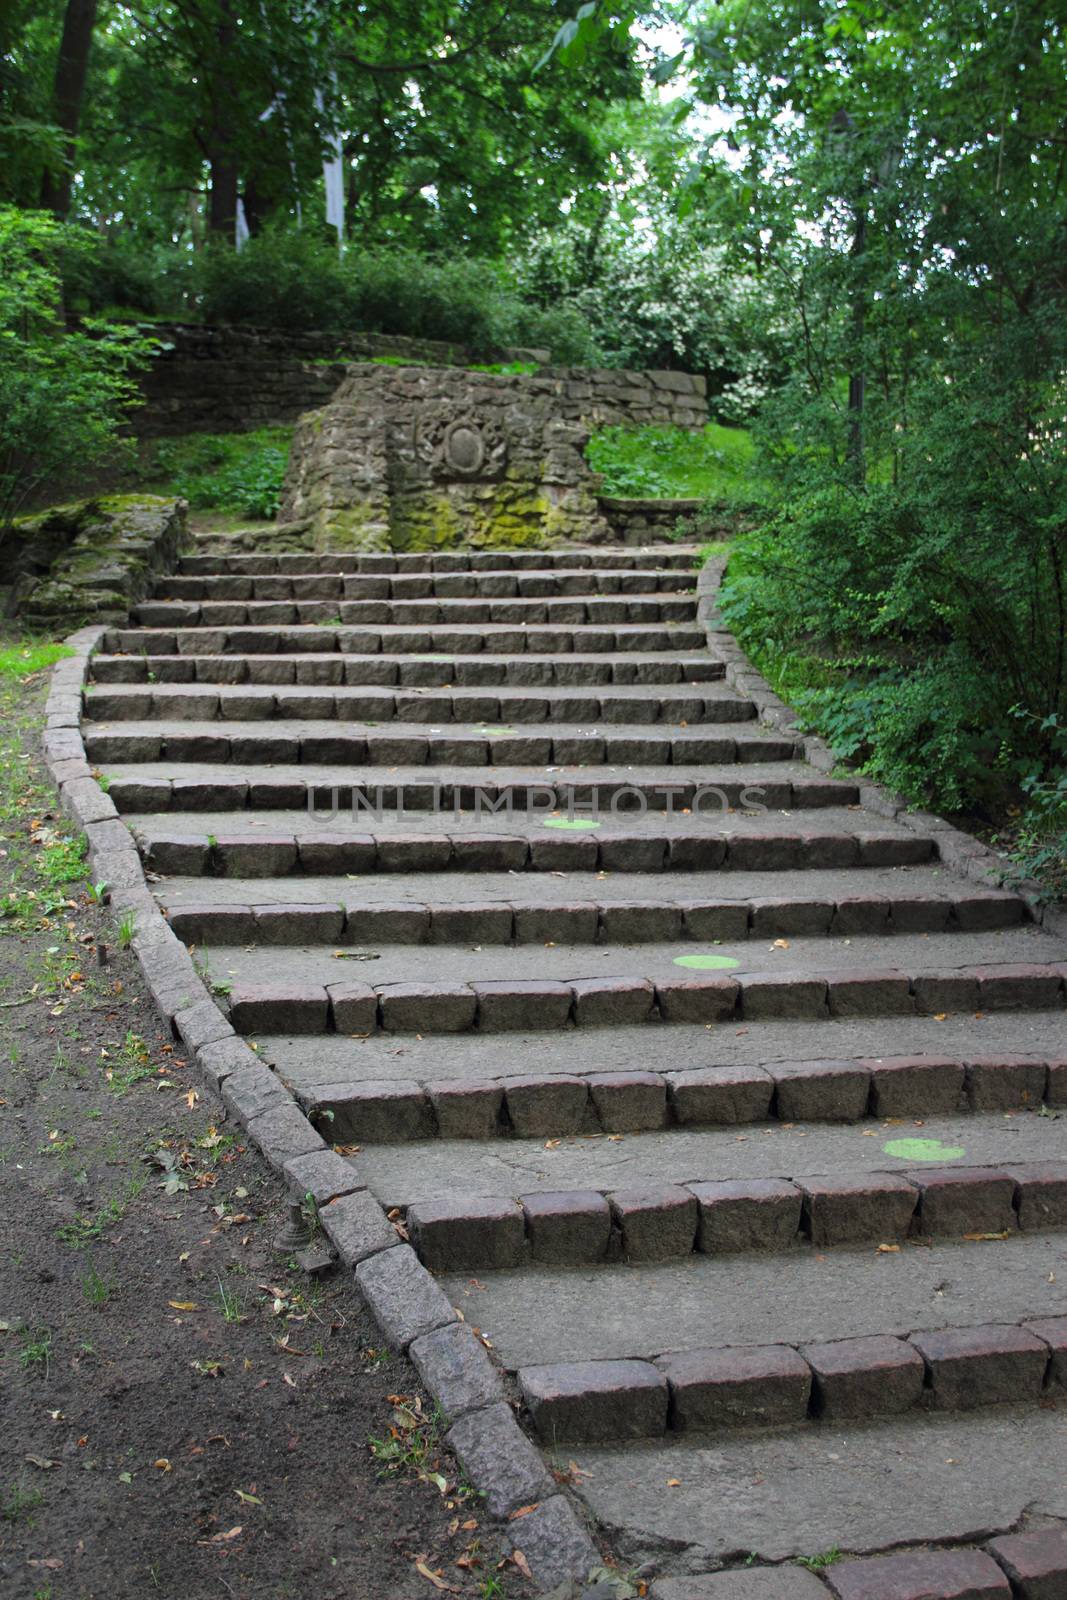 Empty stone Stairway in park of Riga, Latvia